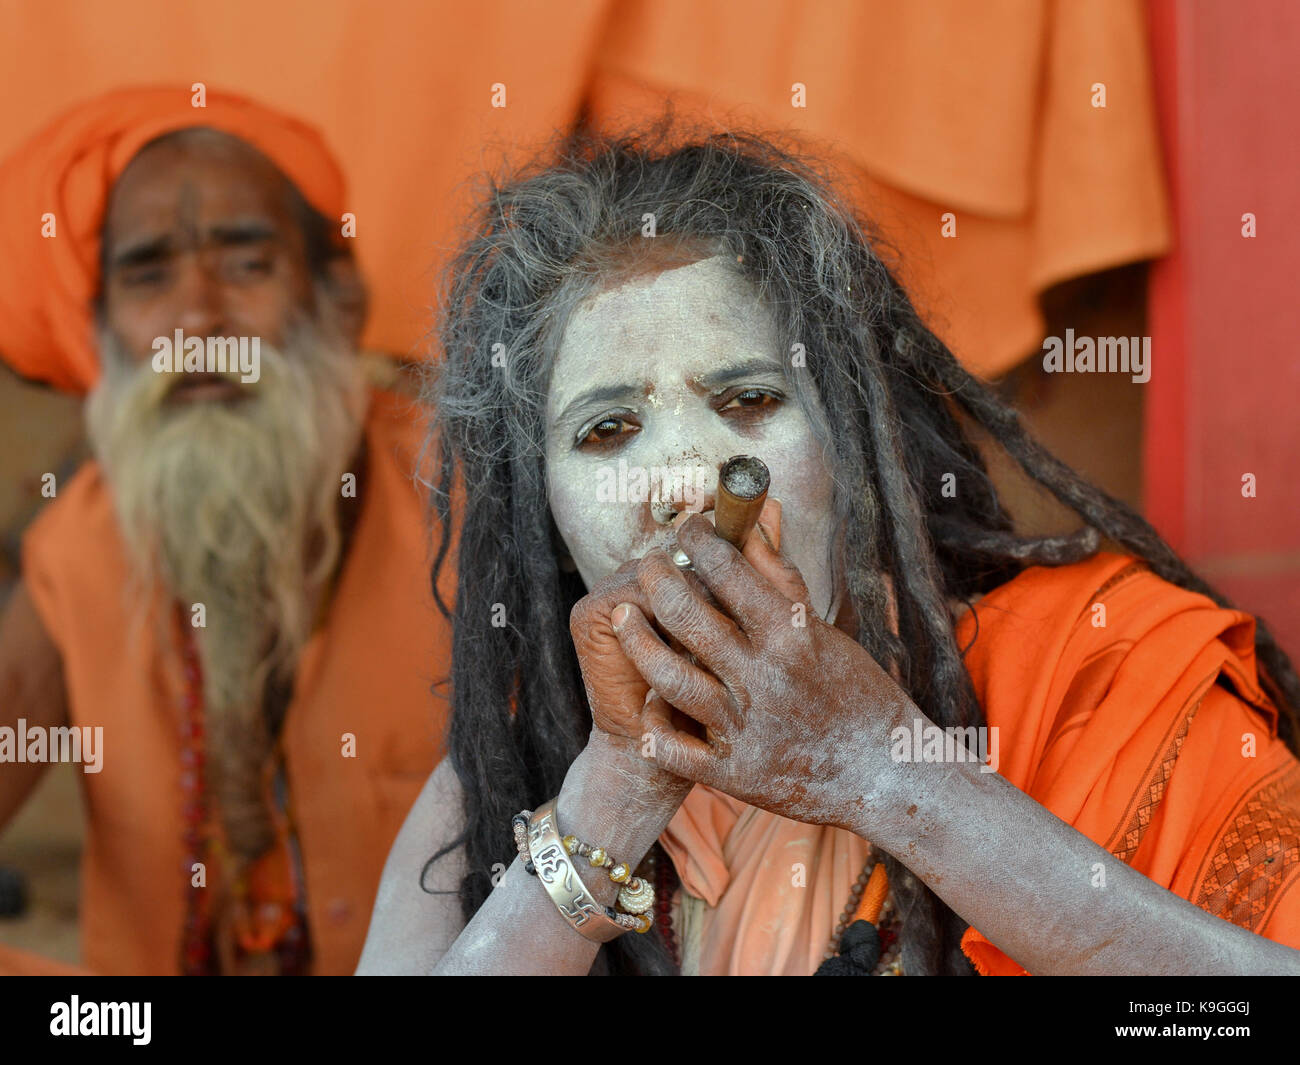 Di mezza età indù indiano santa donna (sadhvi, femmina sadhu) con dreadlocks e vibhuti (bianco sacre ceneri) sul suo viso, fumare hashish (marijuana) Foto Stock